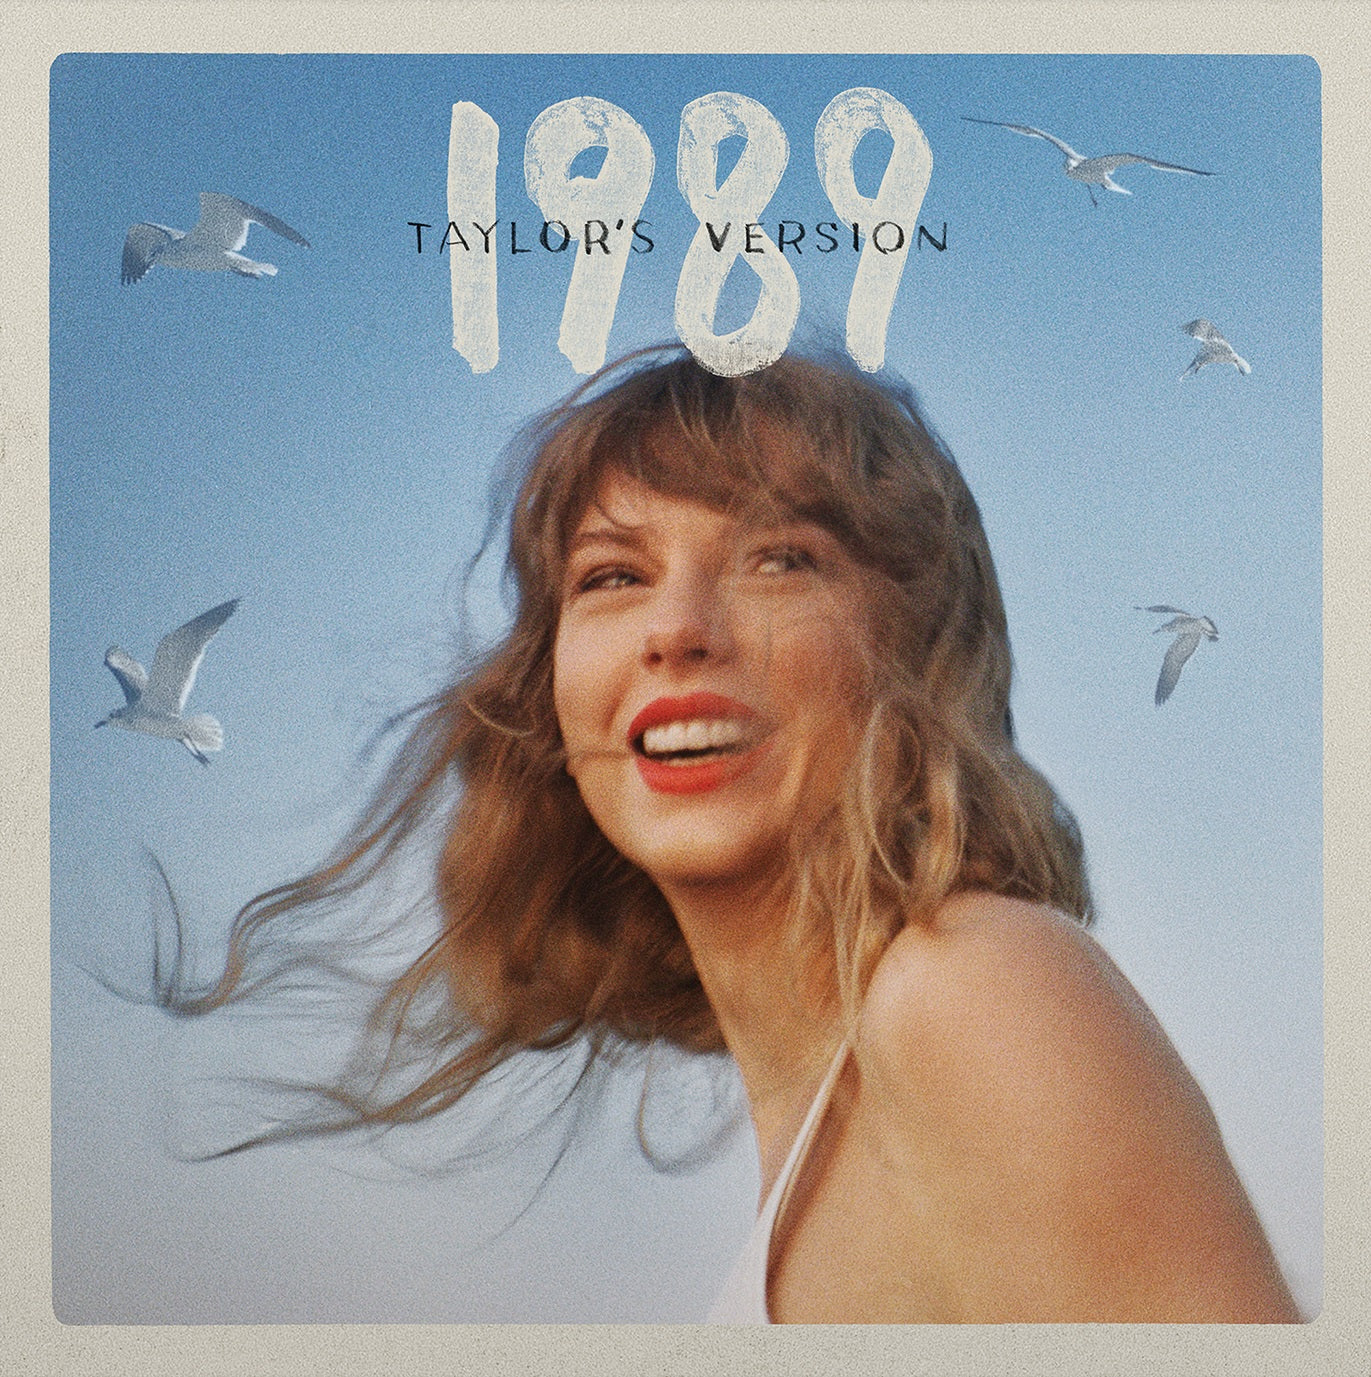 1989 (Taylor's Version) [CD]  - Taylor Swift CD